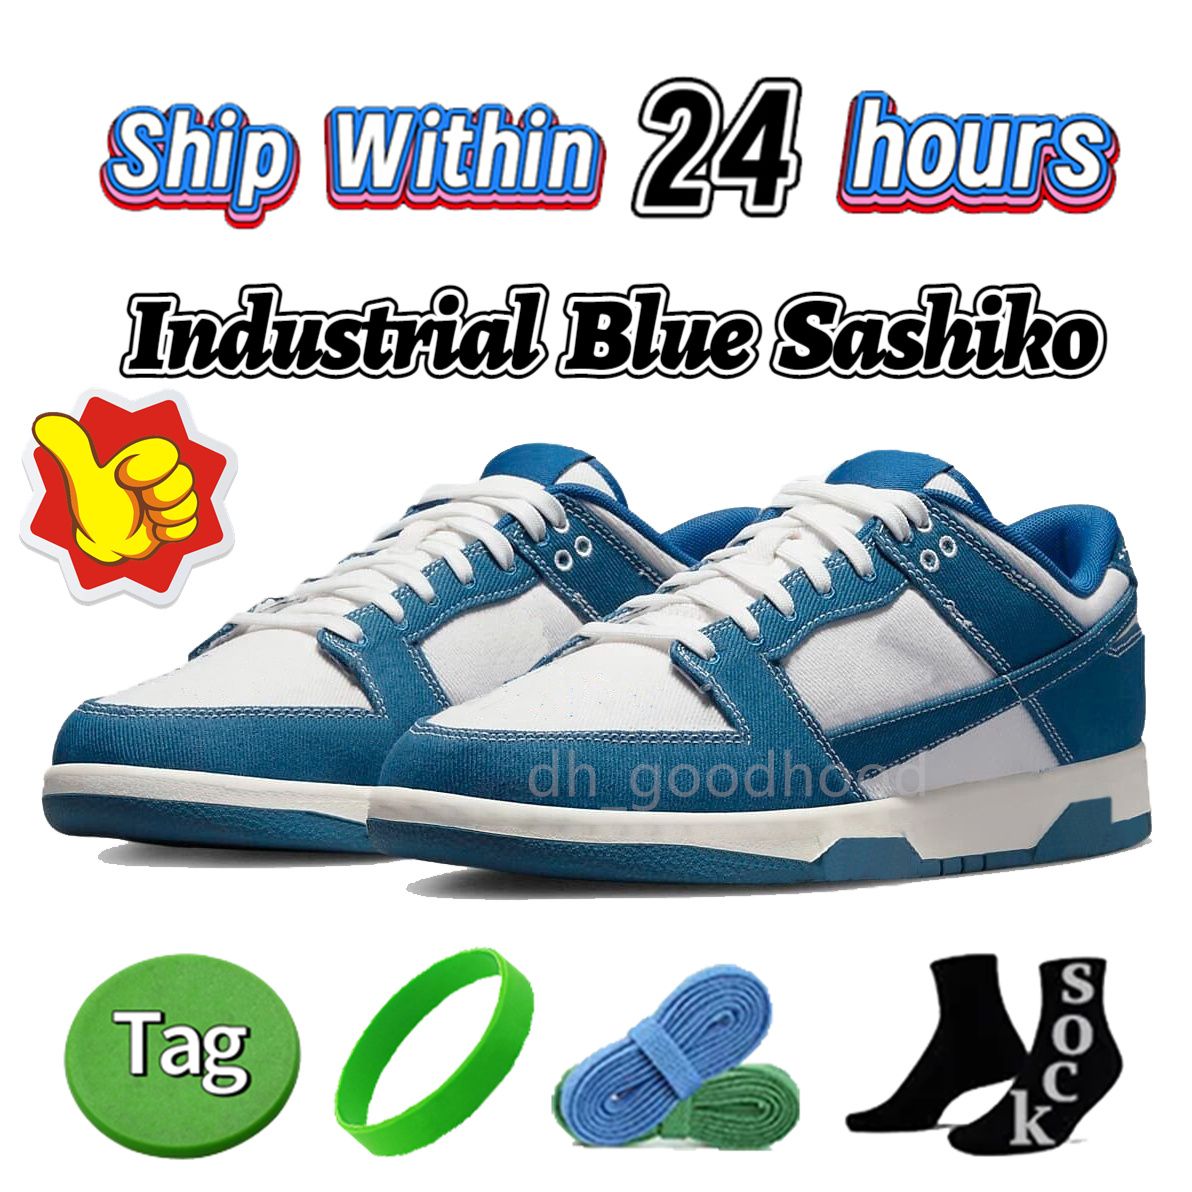 30 industrielle blaue Sashiko